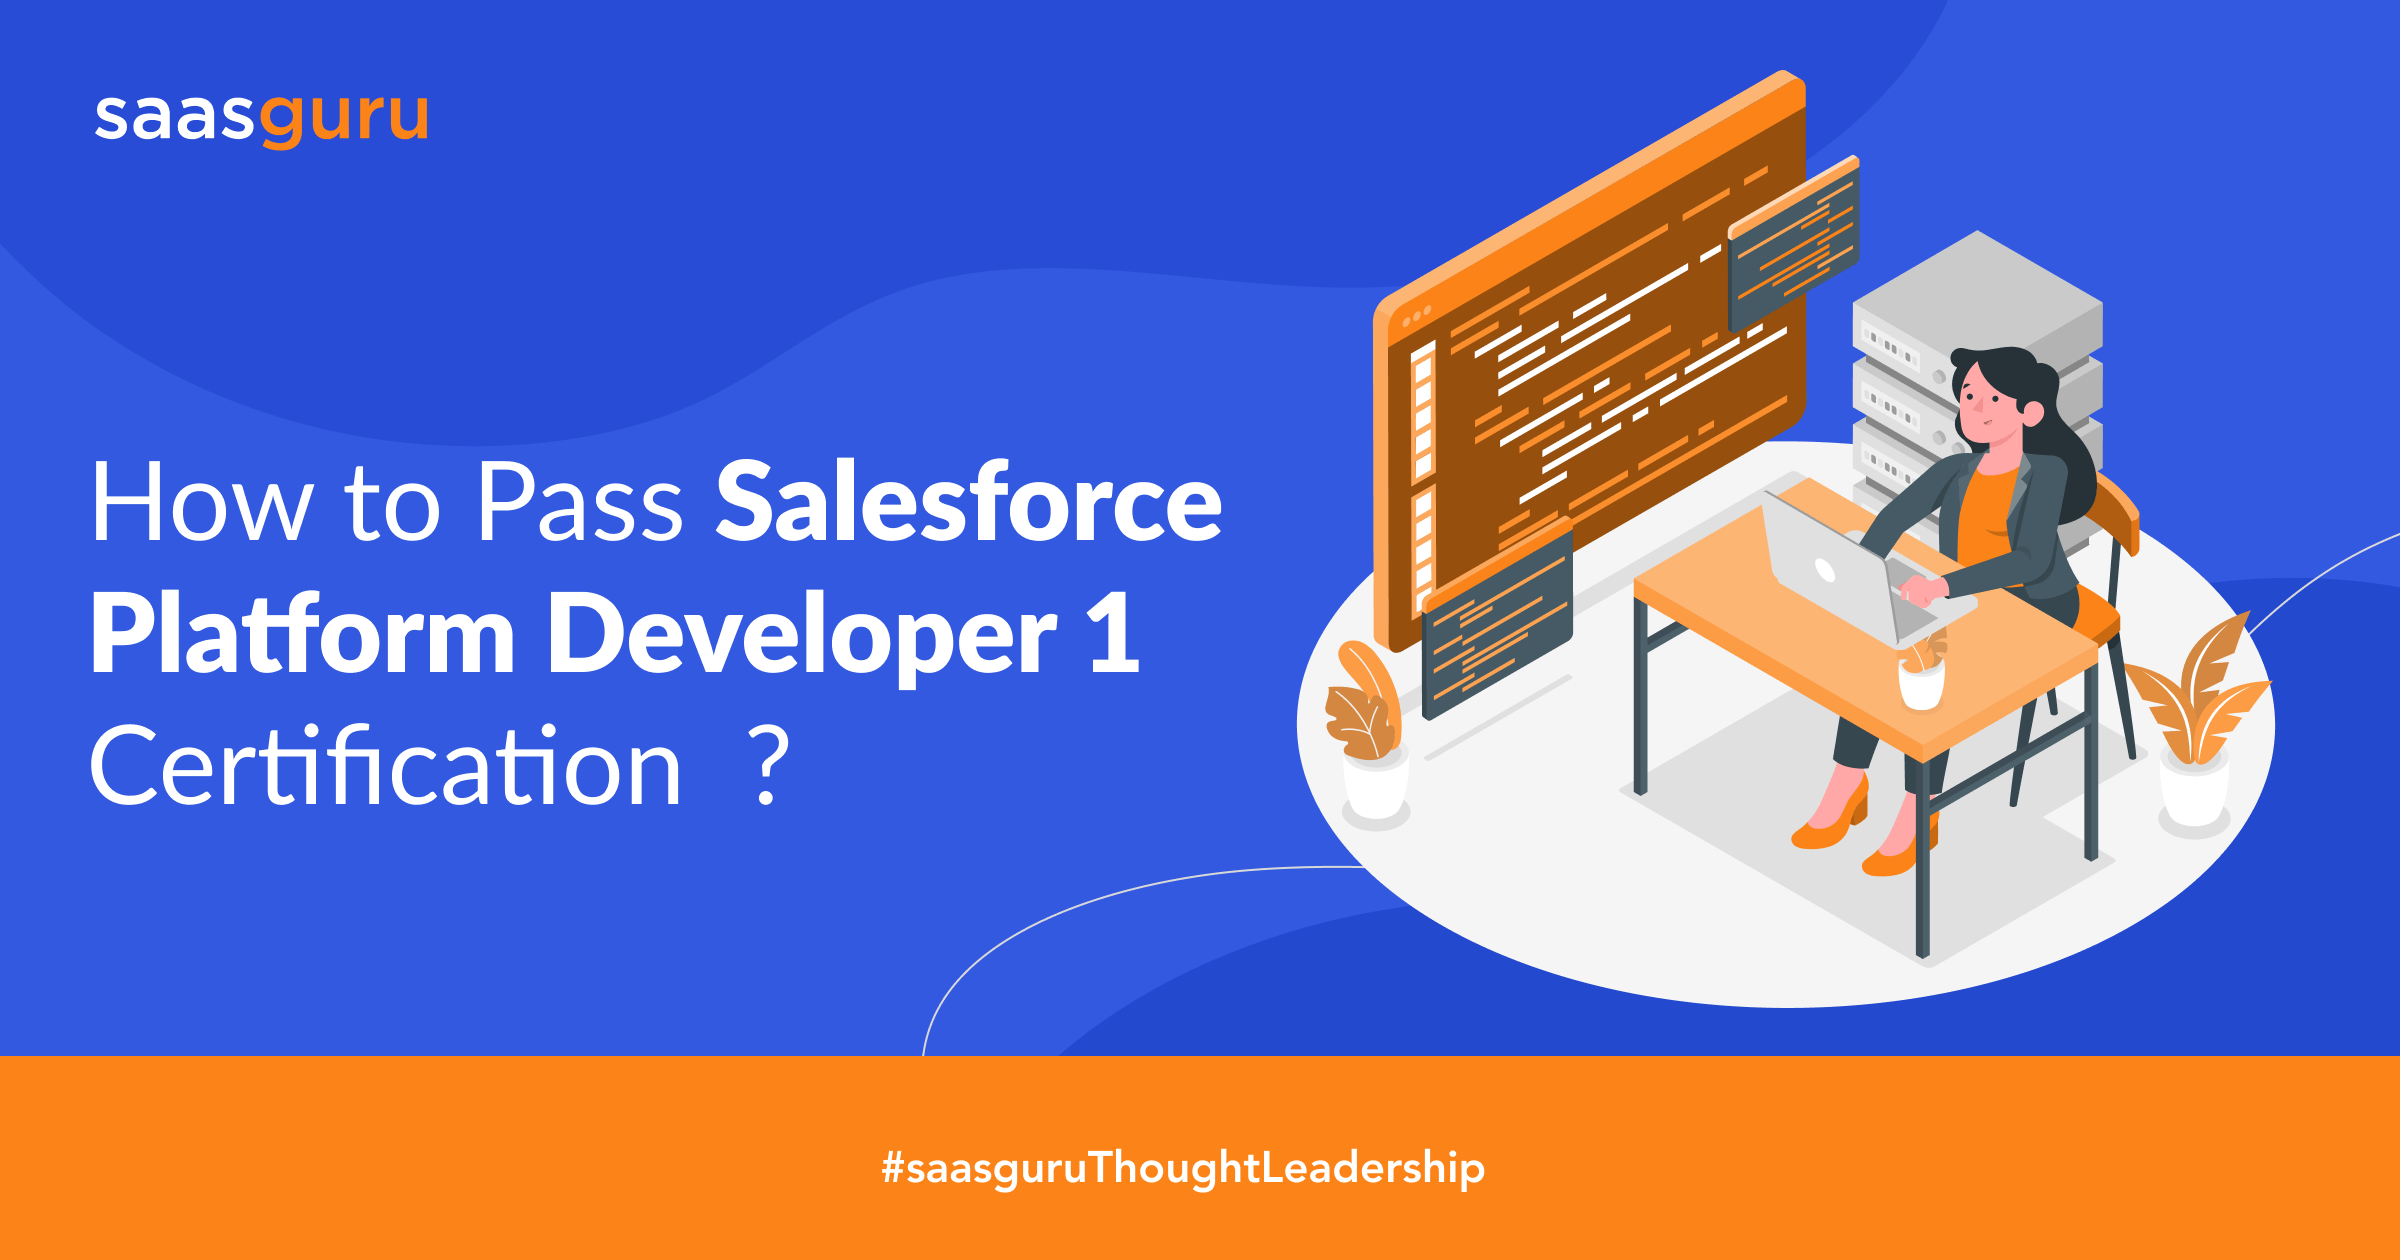 How to Pass Salesforce Platform Developer 1 Certification 2022